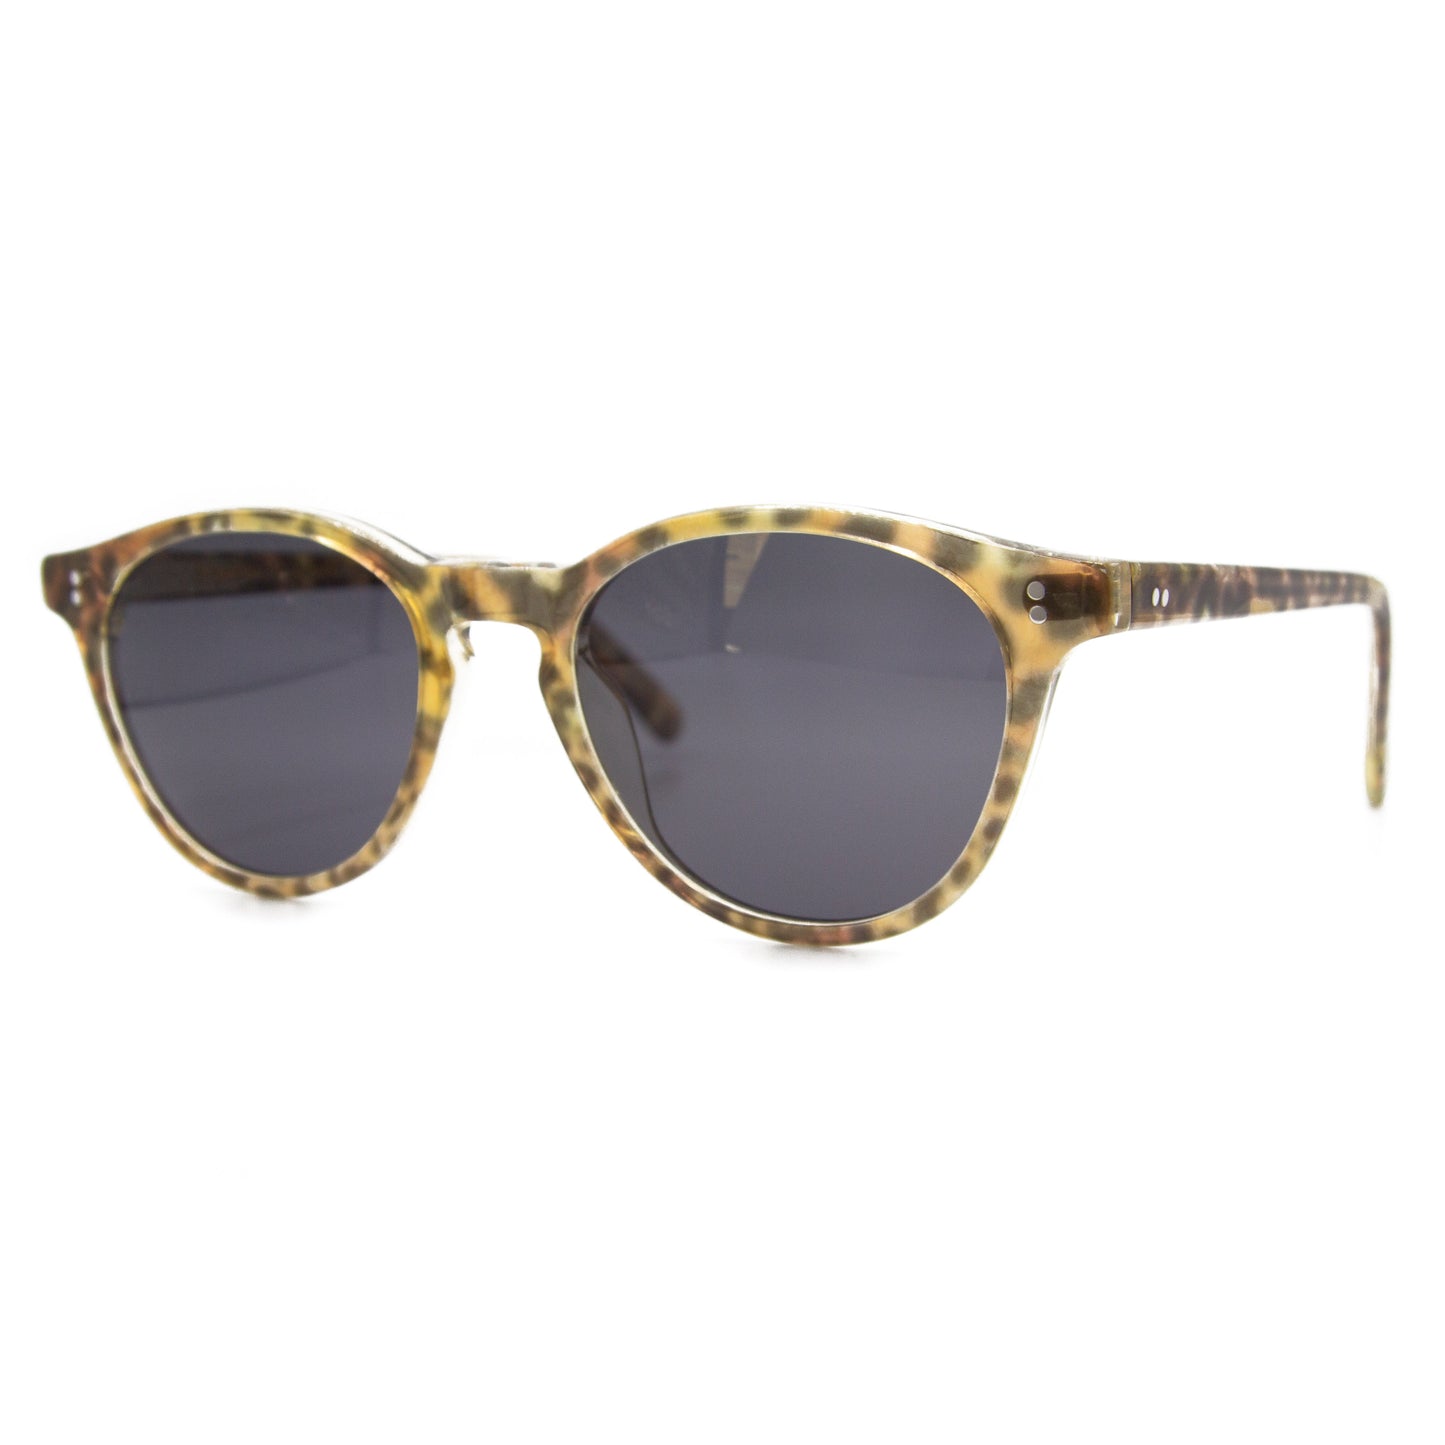 3 brothers - Chantal - Leopard - Prescription Sunglasses - Side